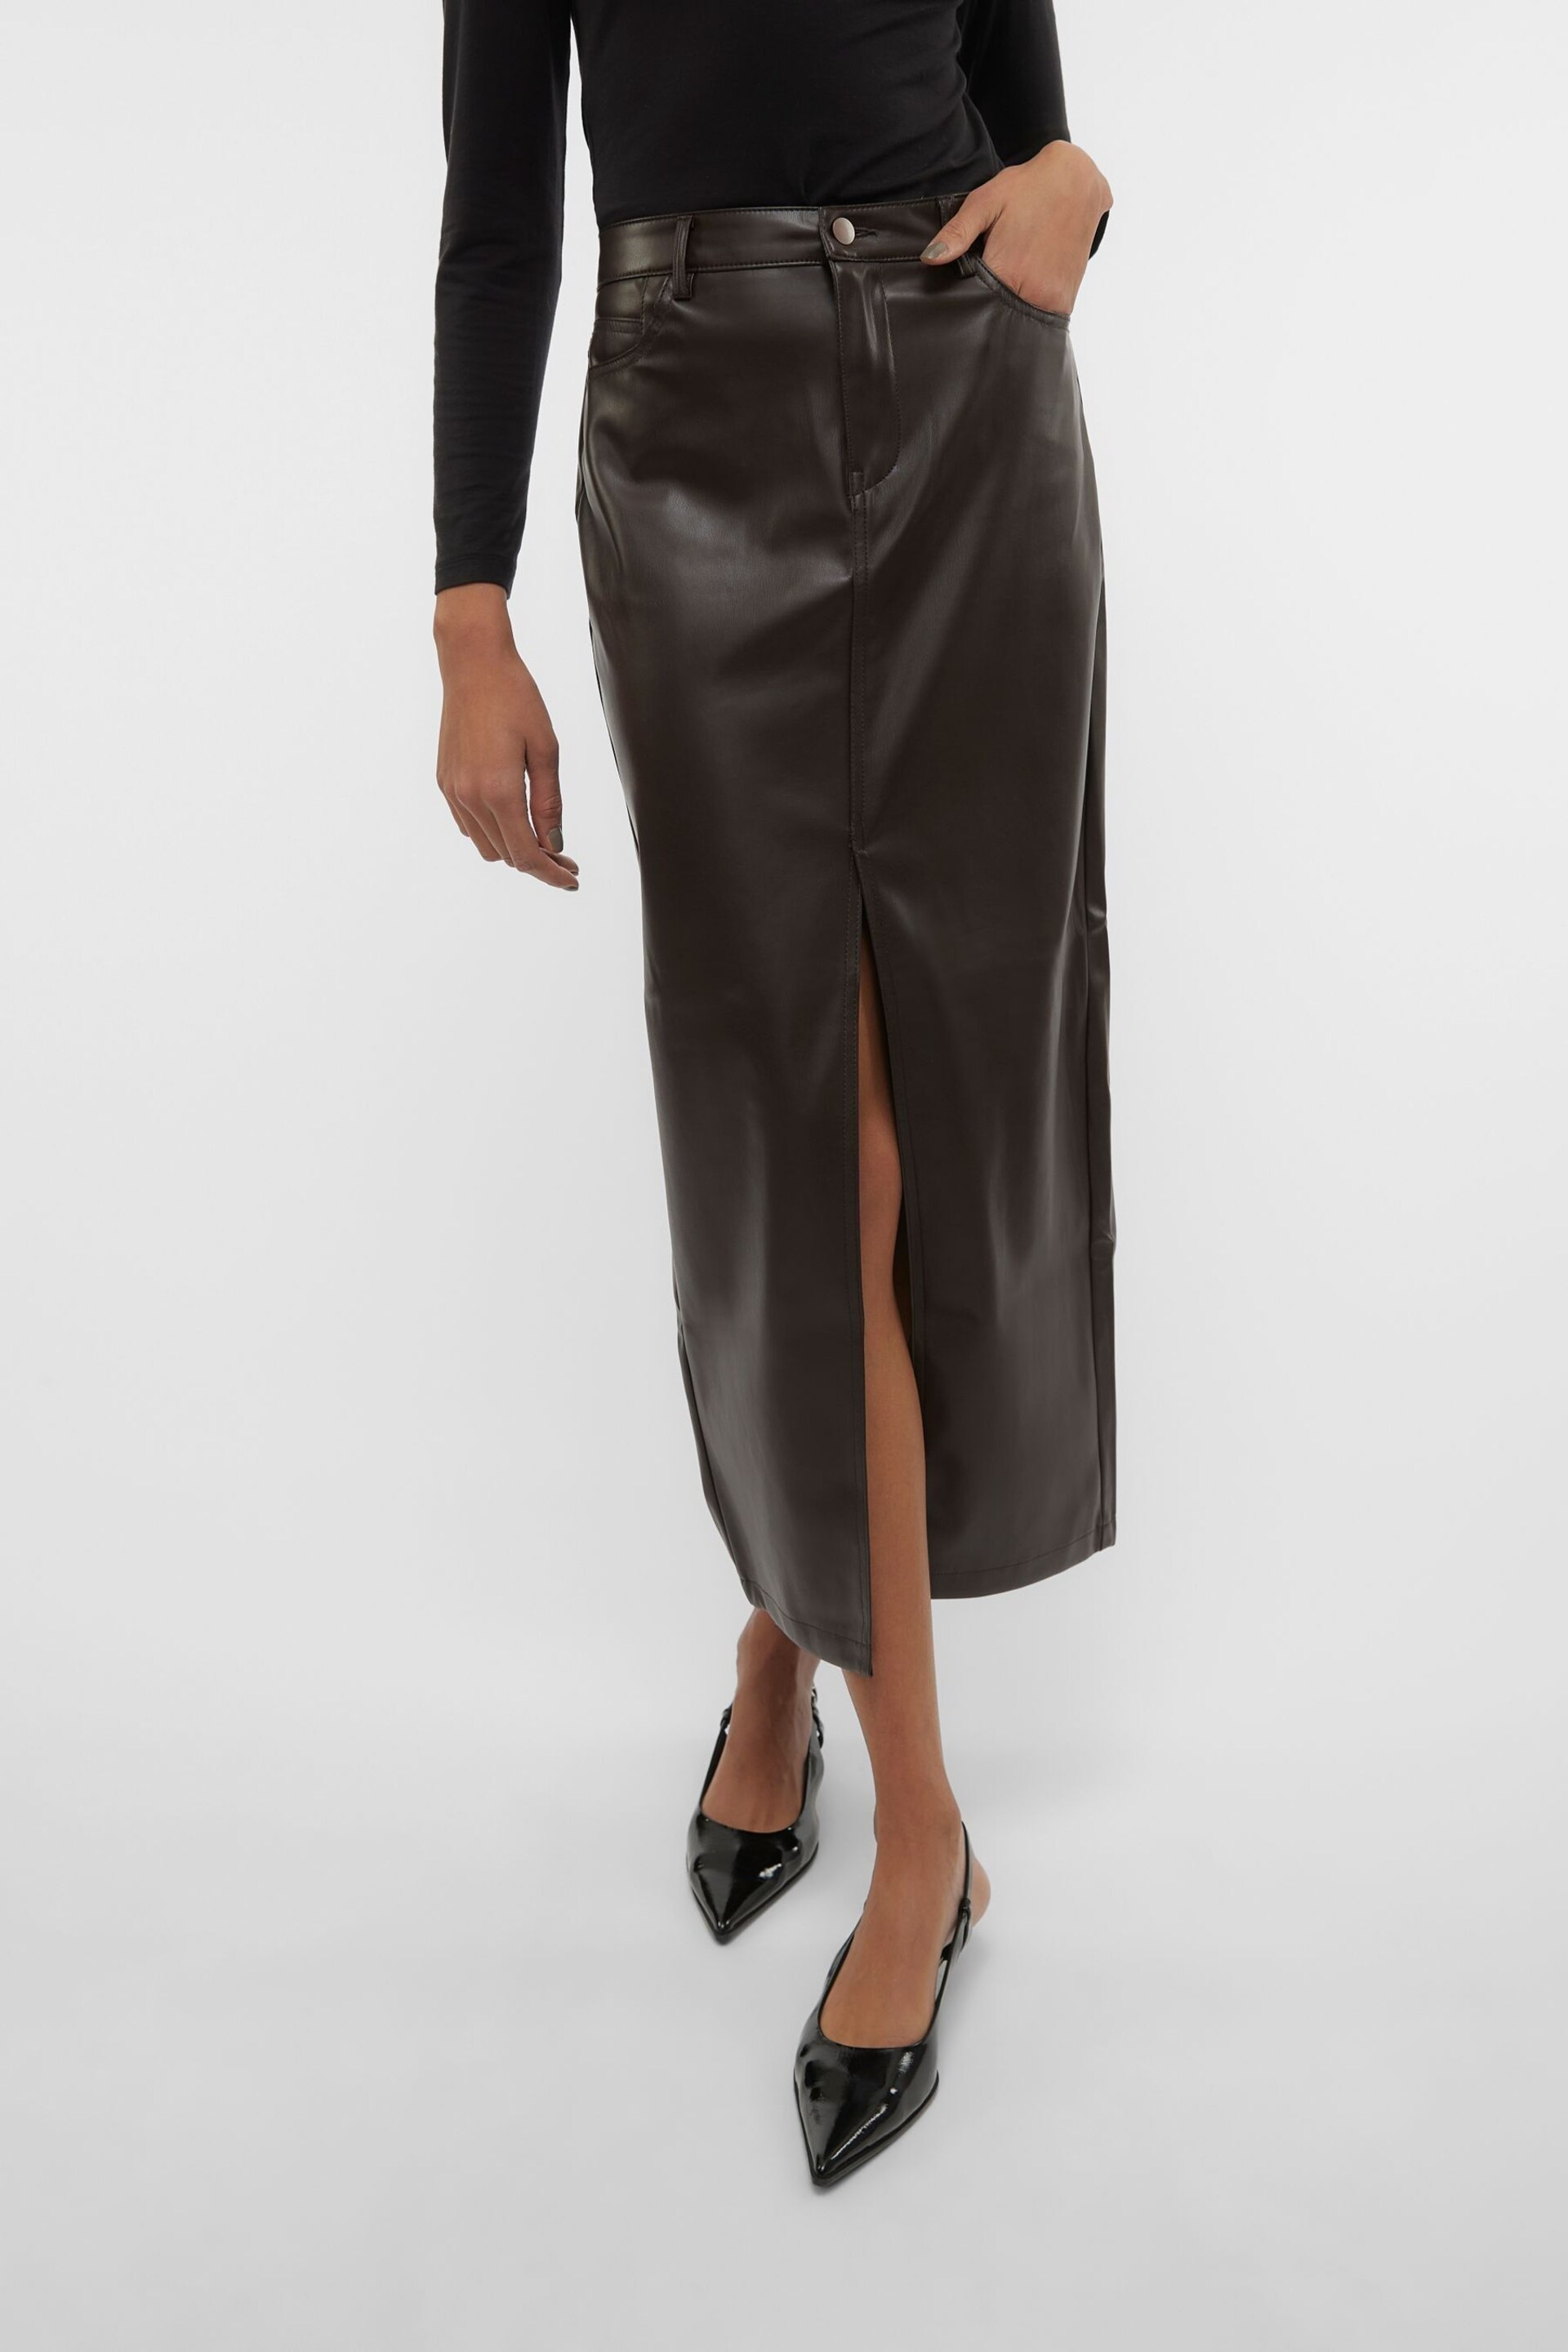 VERO MODA Brown Faux Leather Midi Skirt - Image 3 of 7